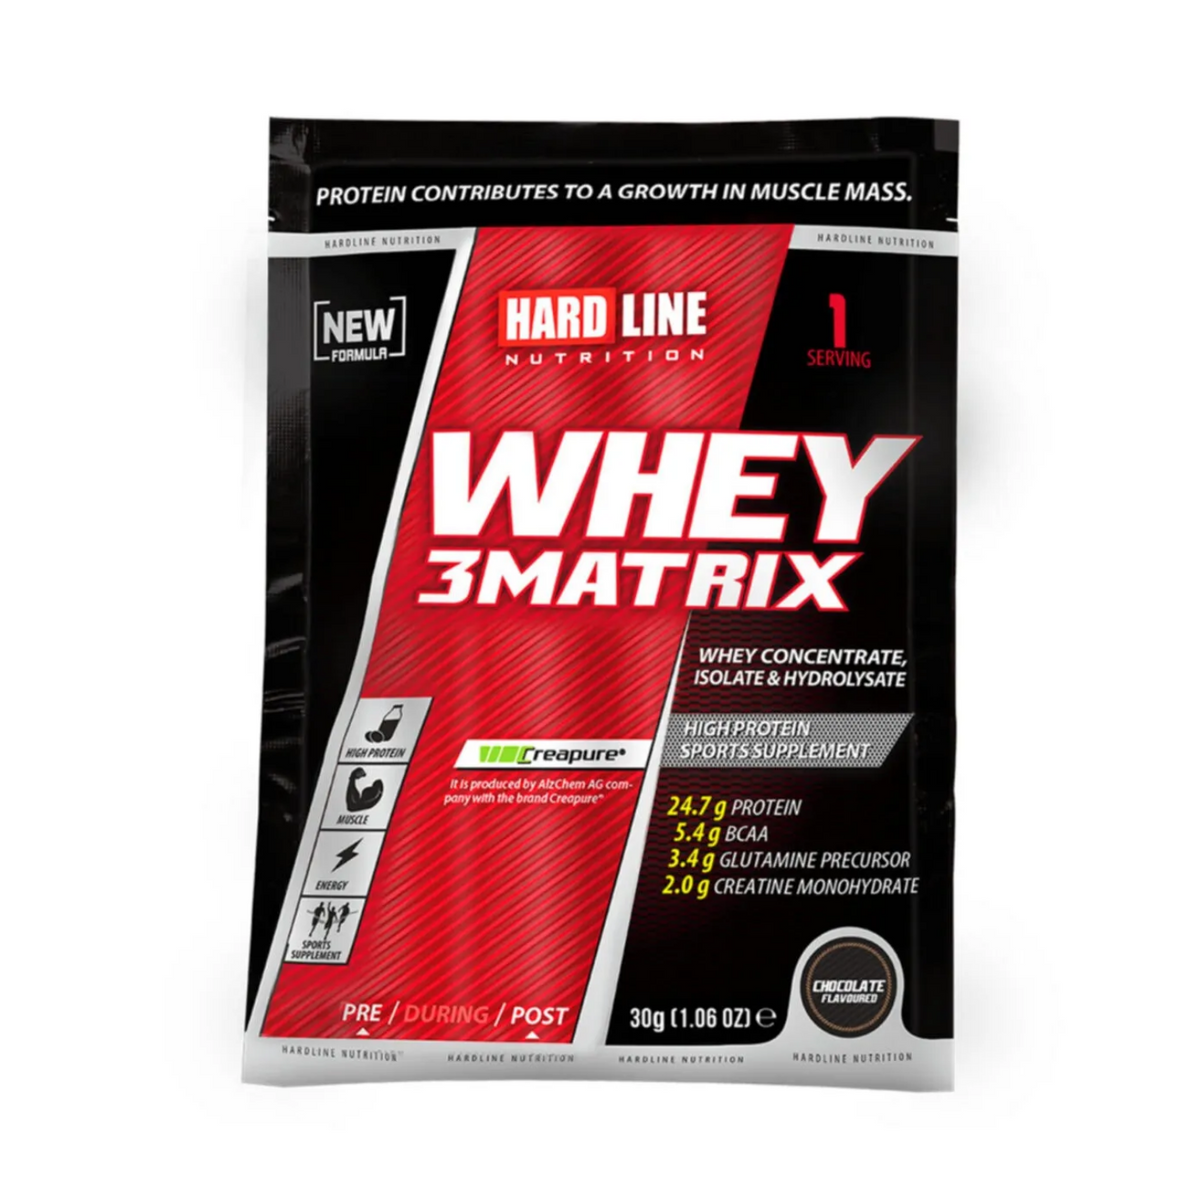 Hardline Nutrition Whey 3Matrix Çikolata 30 g 1 Adet